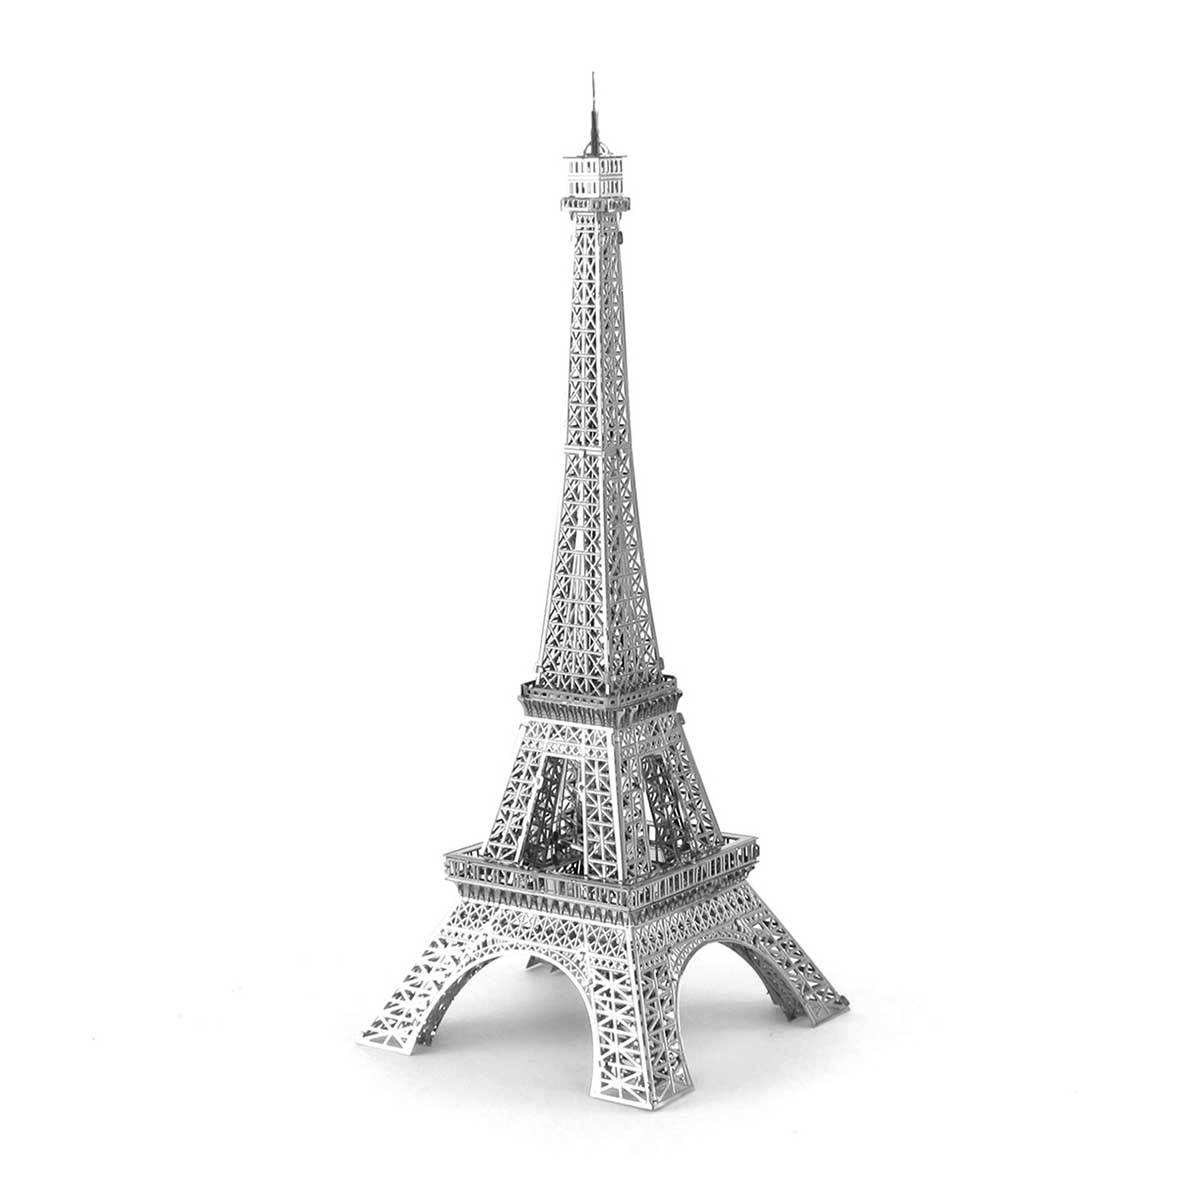 ICONX - Eiffel Tower Landmarks & Monuments Metal Puzzles